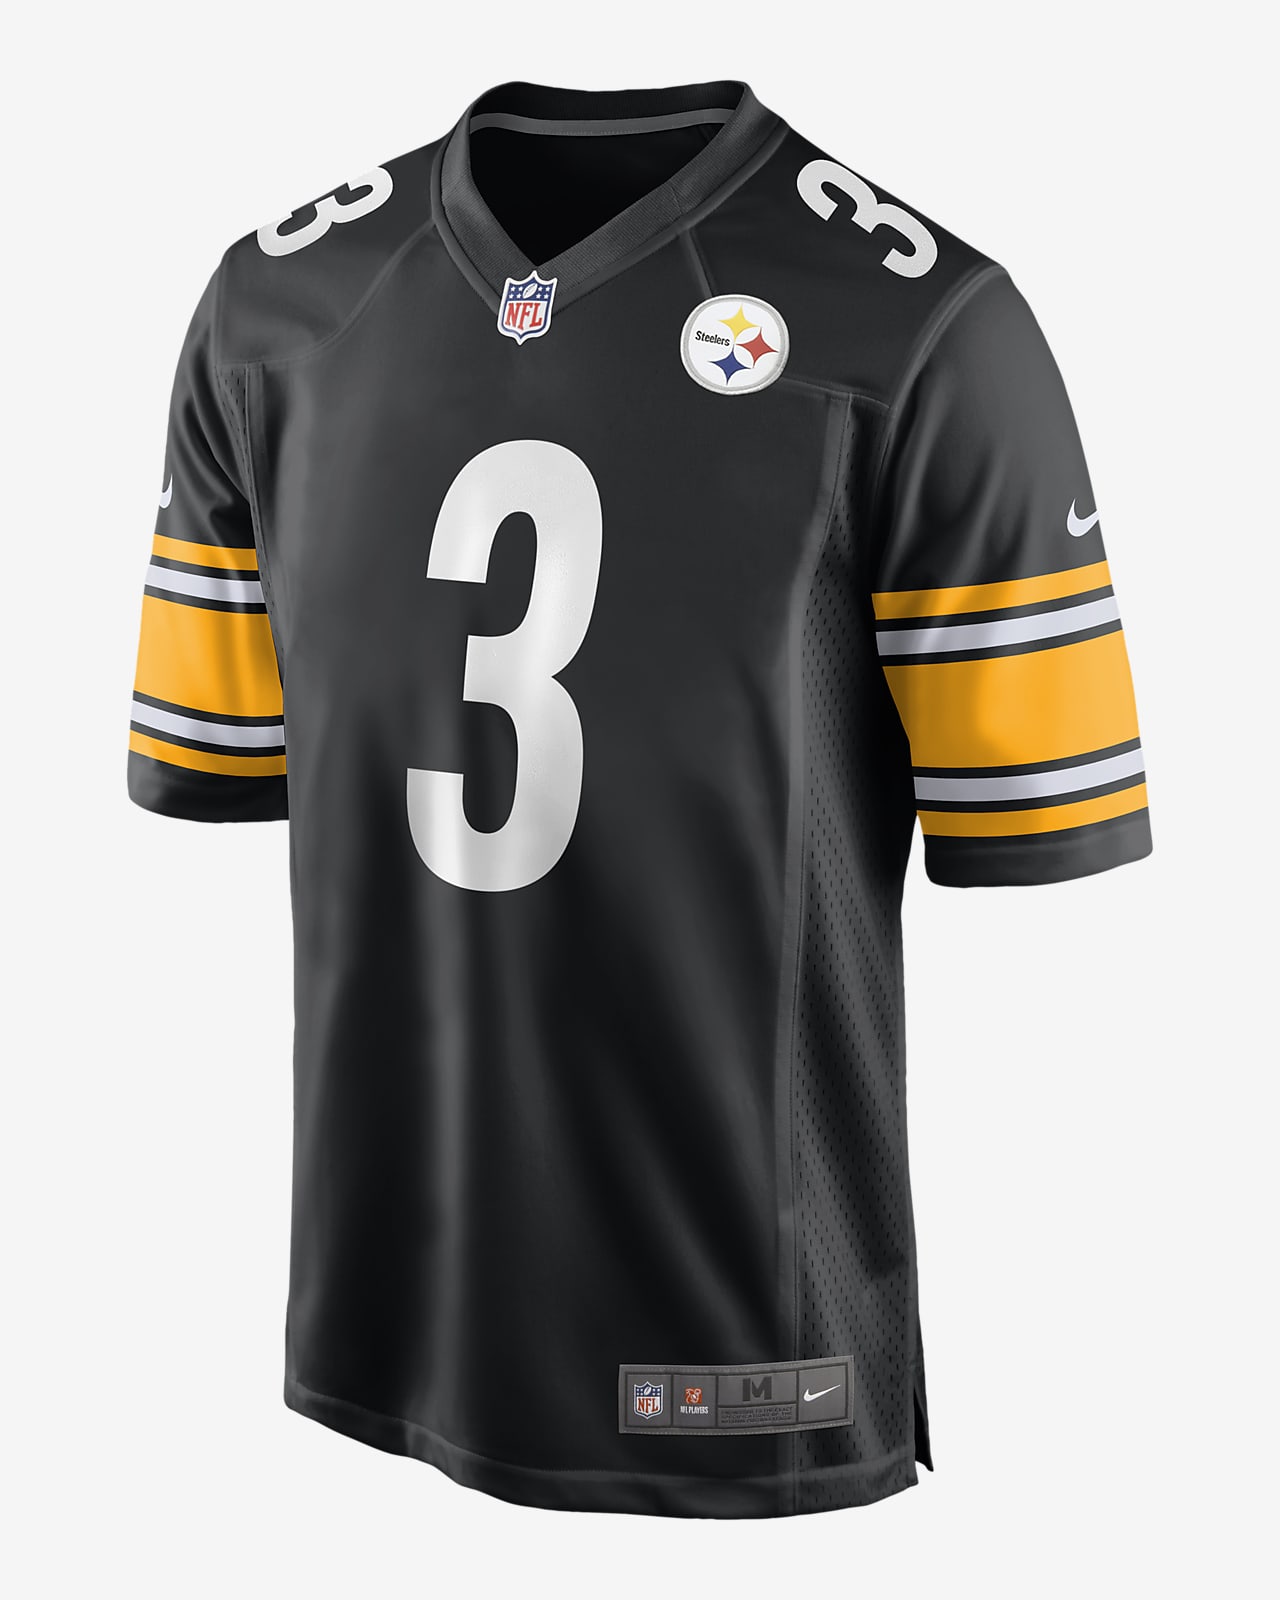 Jersey de fútbol americano Nike de la NFL Game para hombre Russell Wilson Pittsburgh Steelers